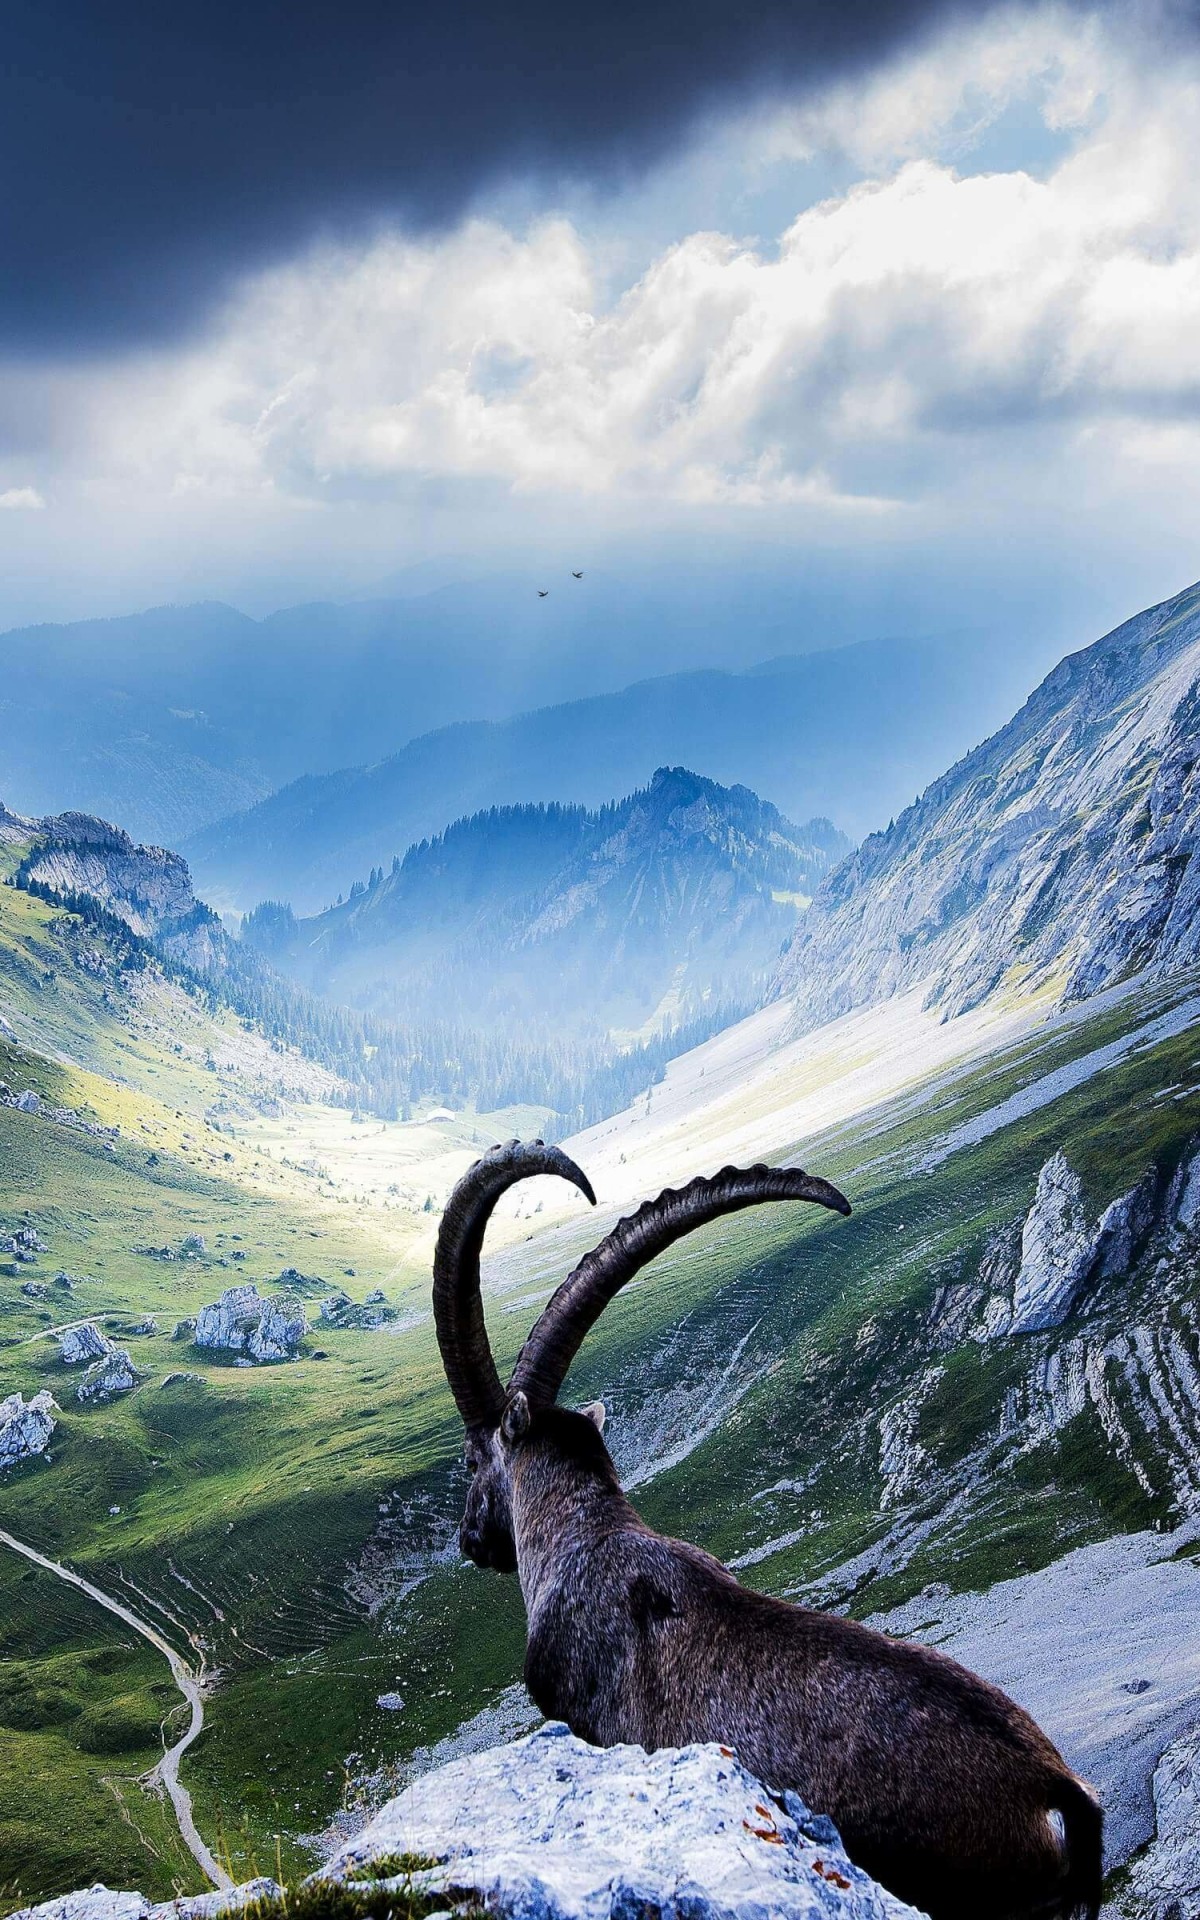 Goat at Pilatus, Switzerland Wallpaper for Amazon Kindle Fire HDX